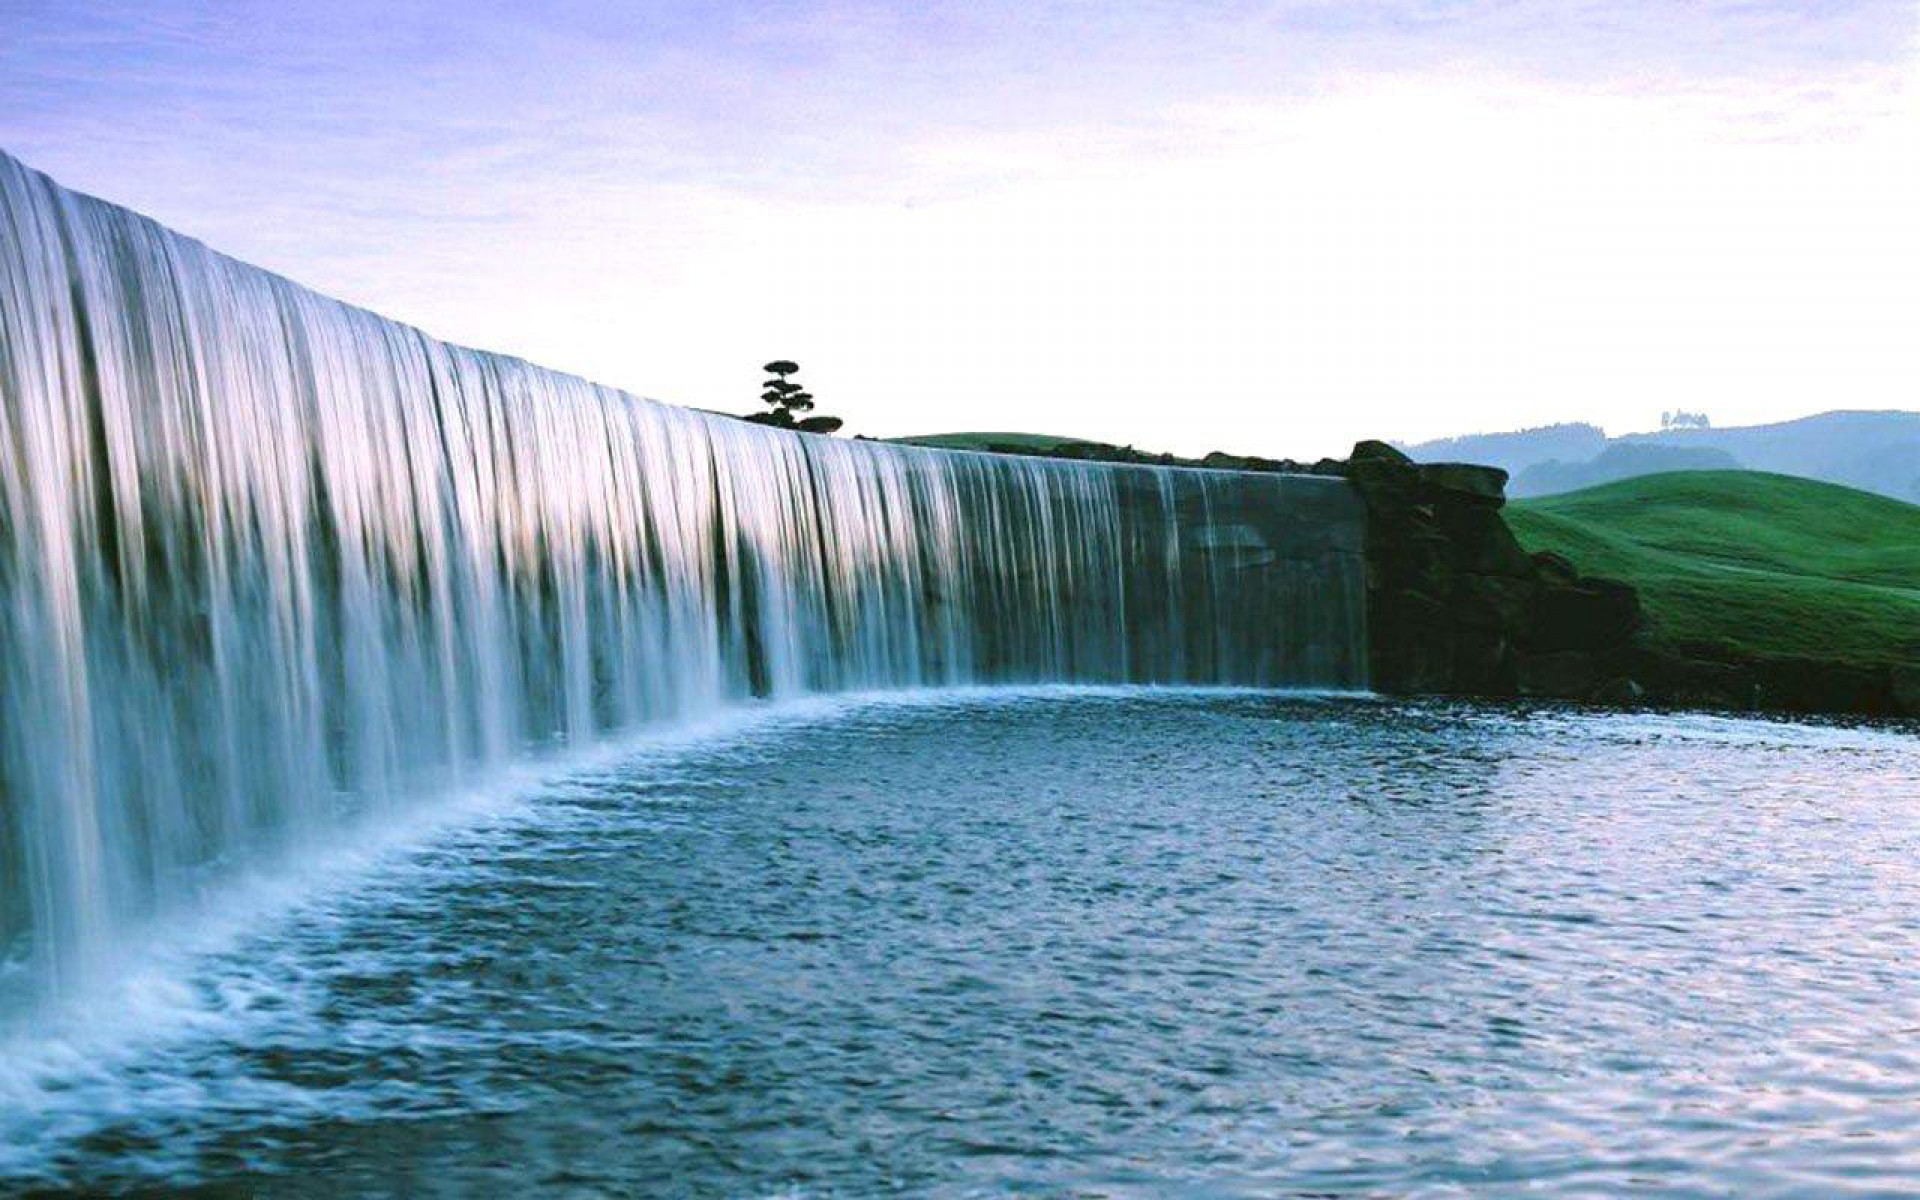 water screen wallpaper,water resources,body of water,waterfall,water,nature